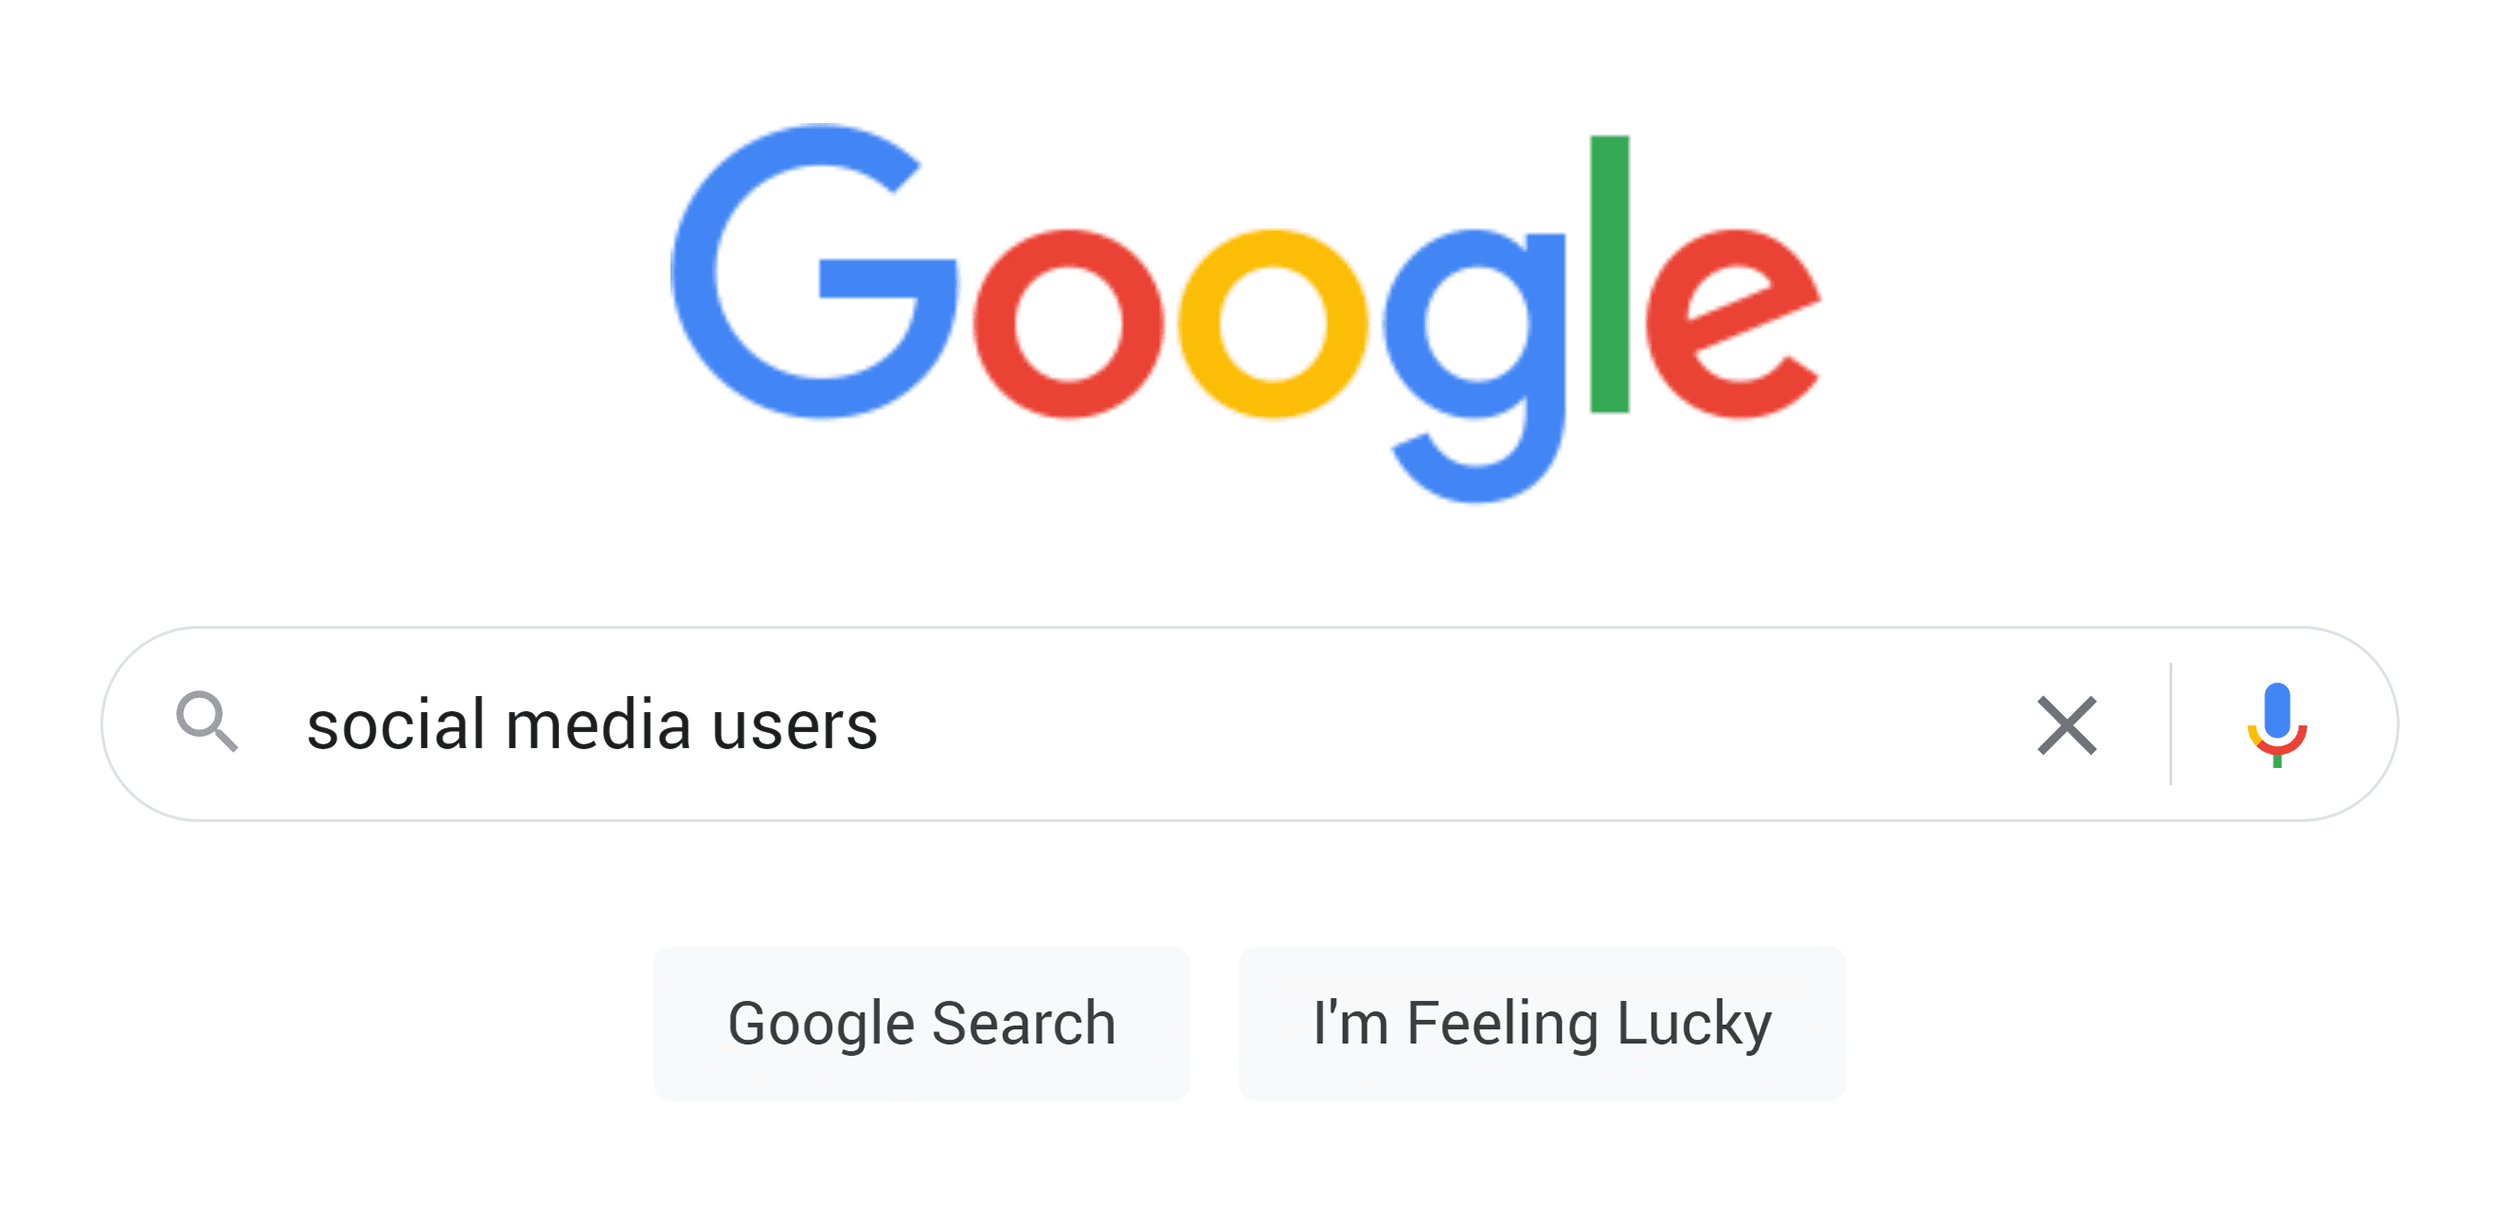 Google search – Social media users